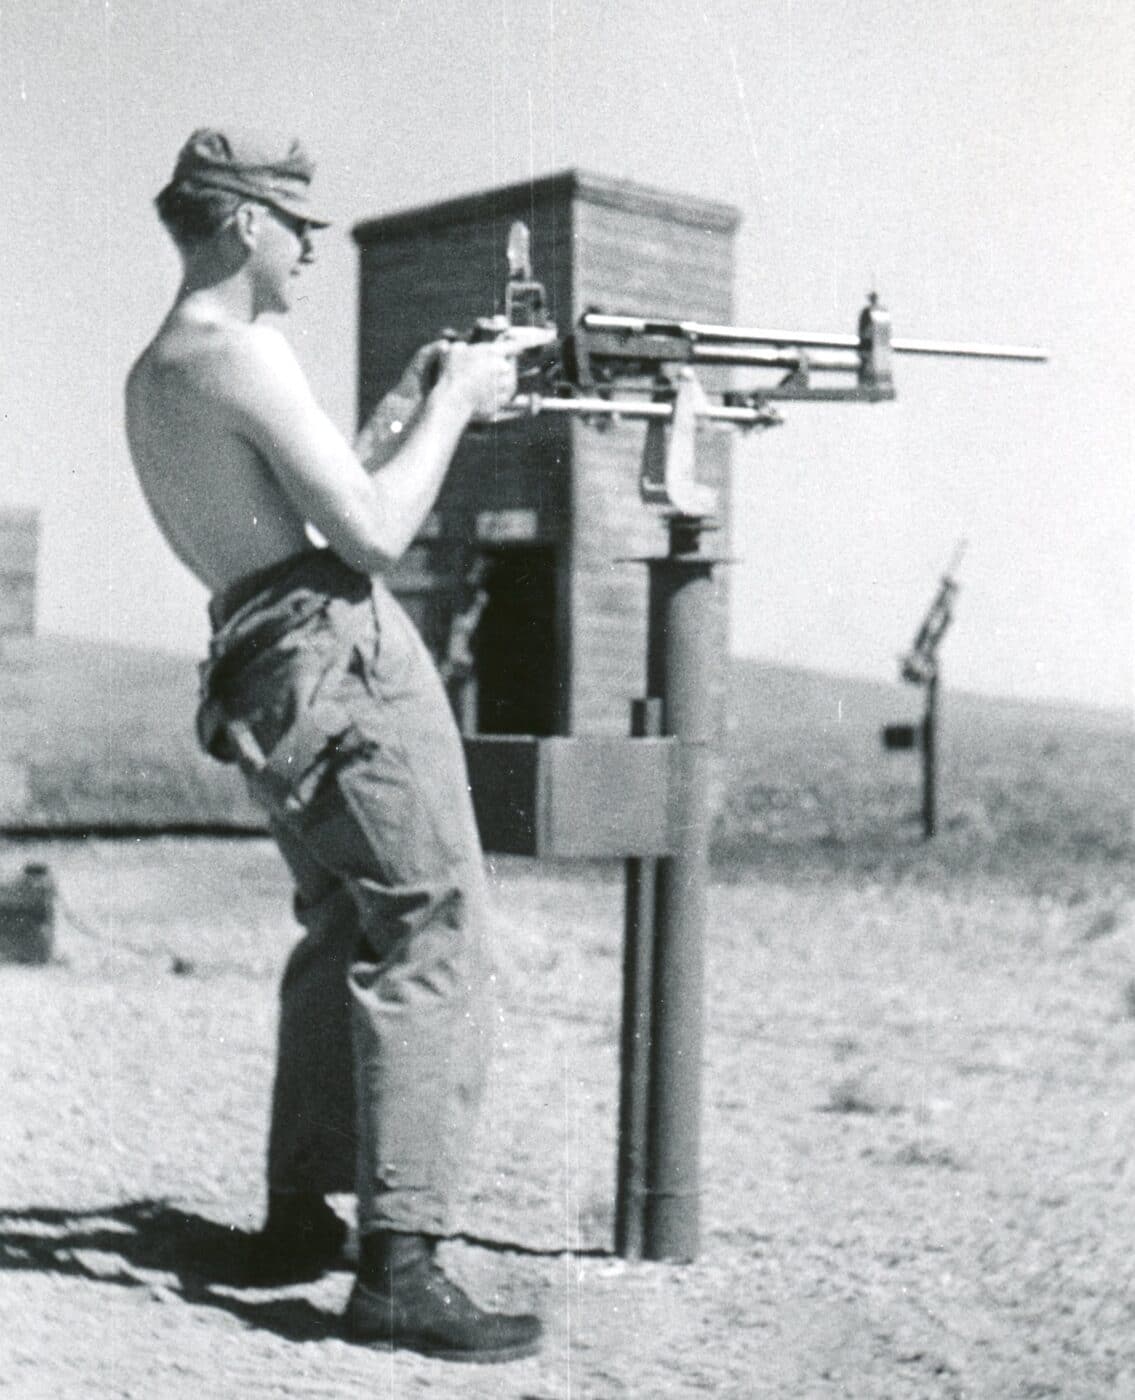 A USAF gunner training with a shotgun